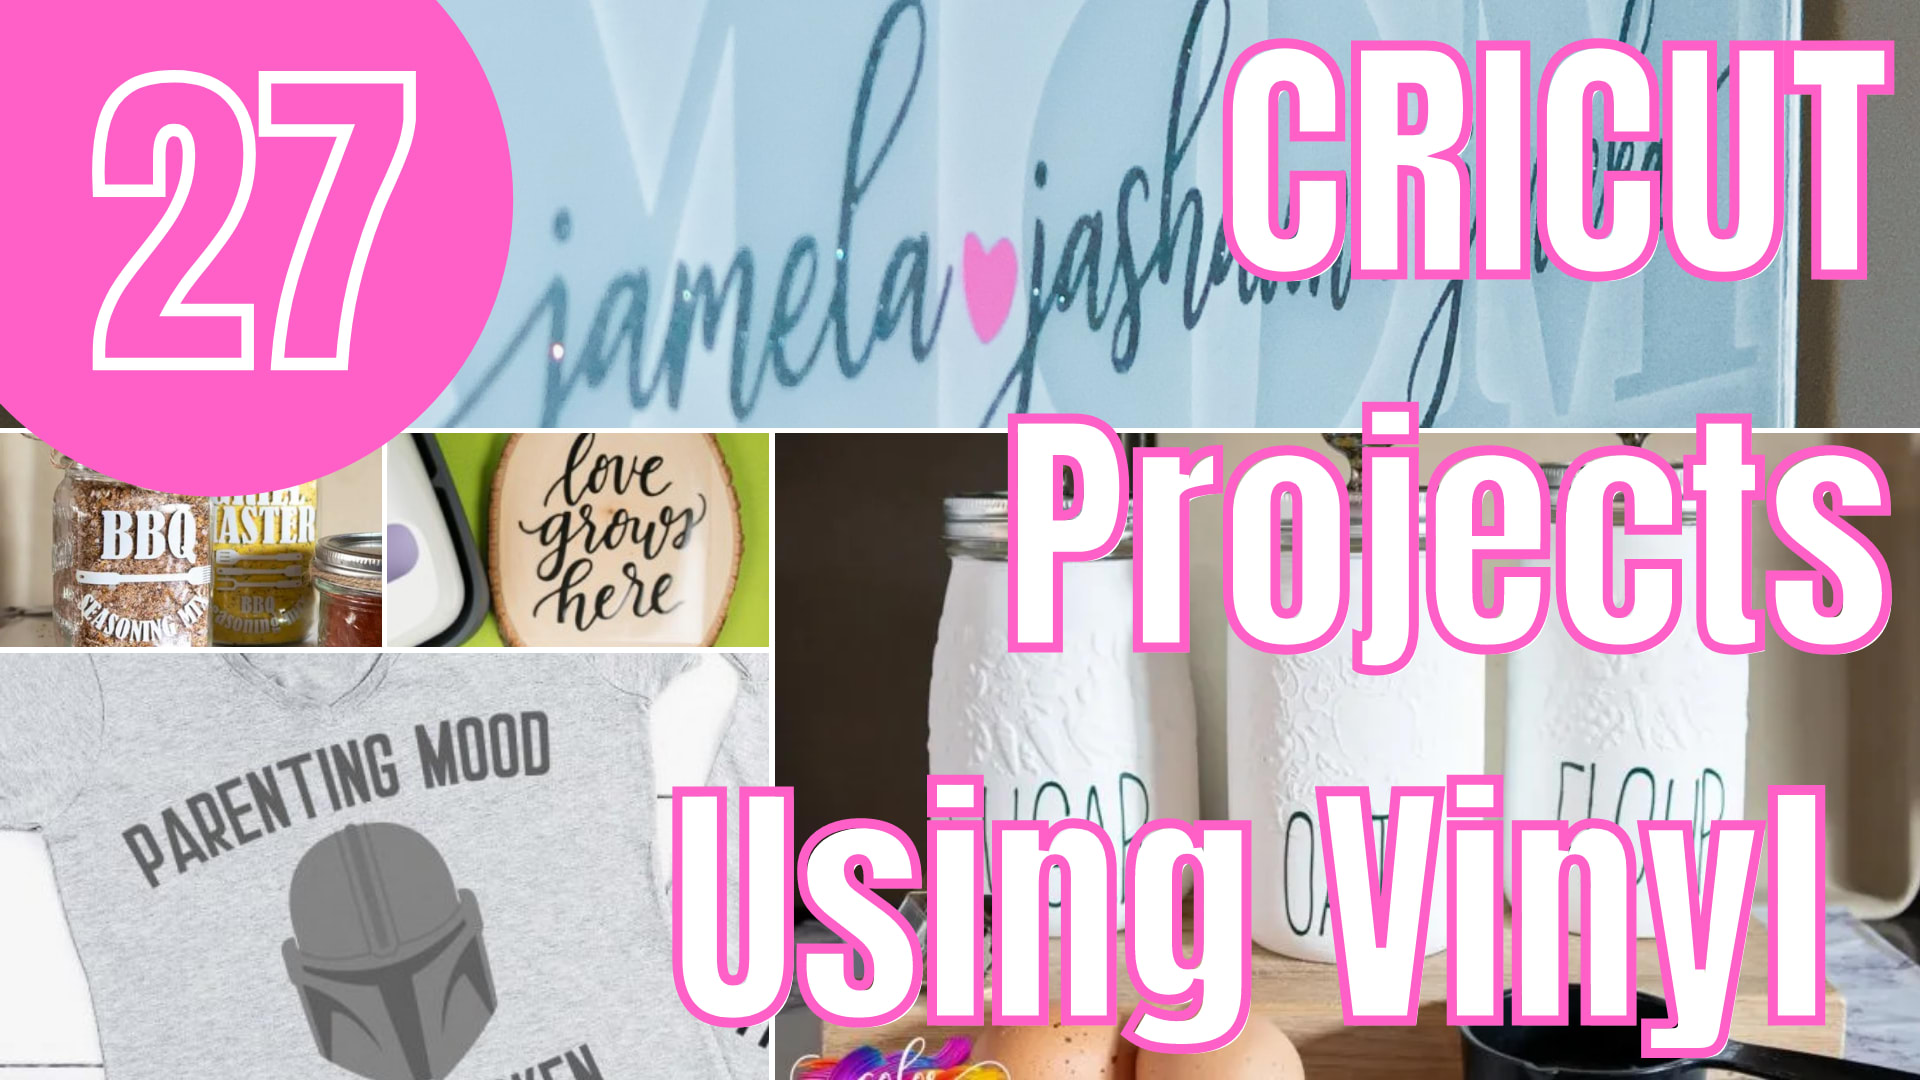 Smart Vinyl: 6 projects to make with Cricut materials – Cricut